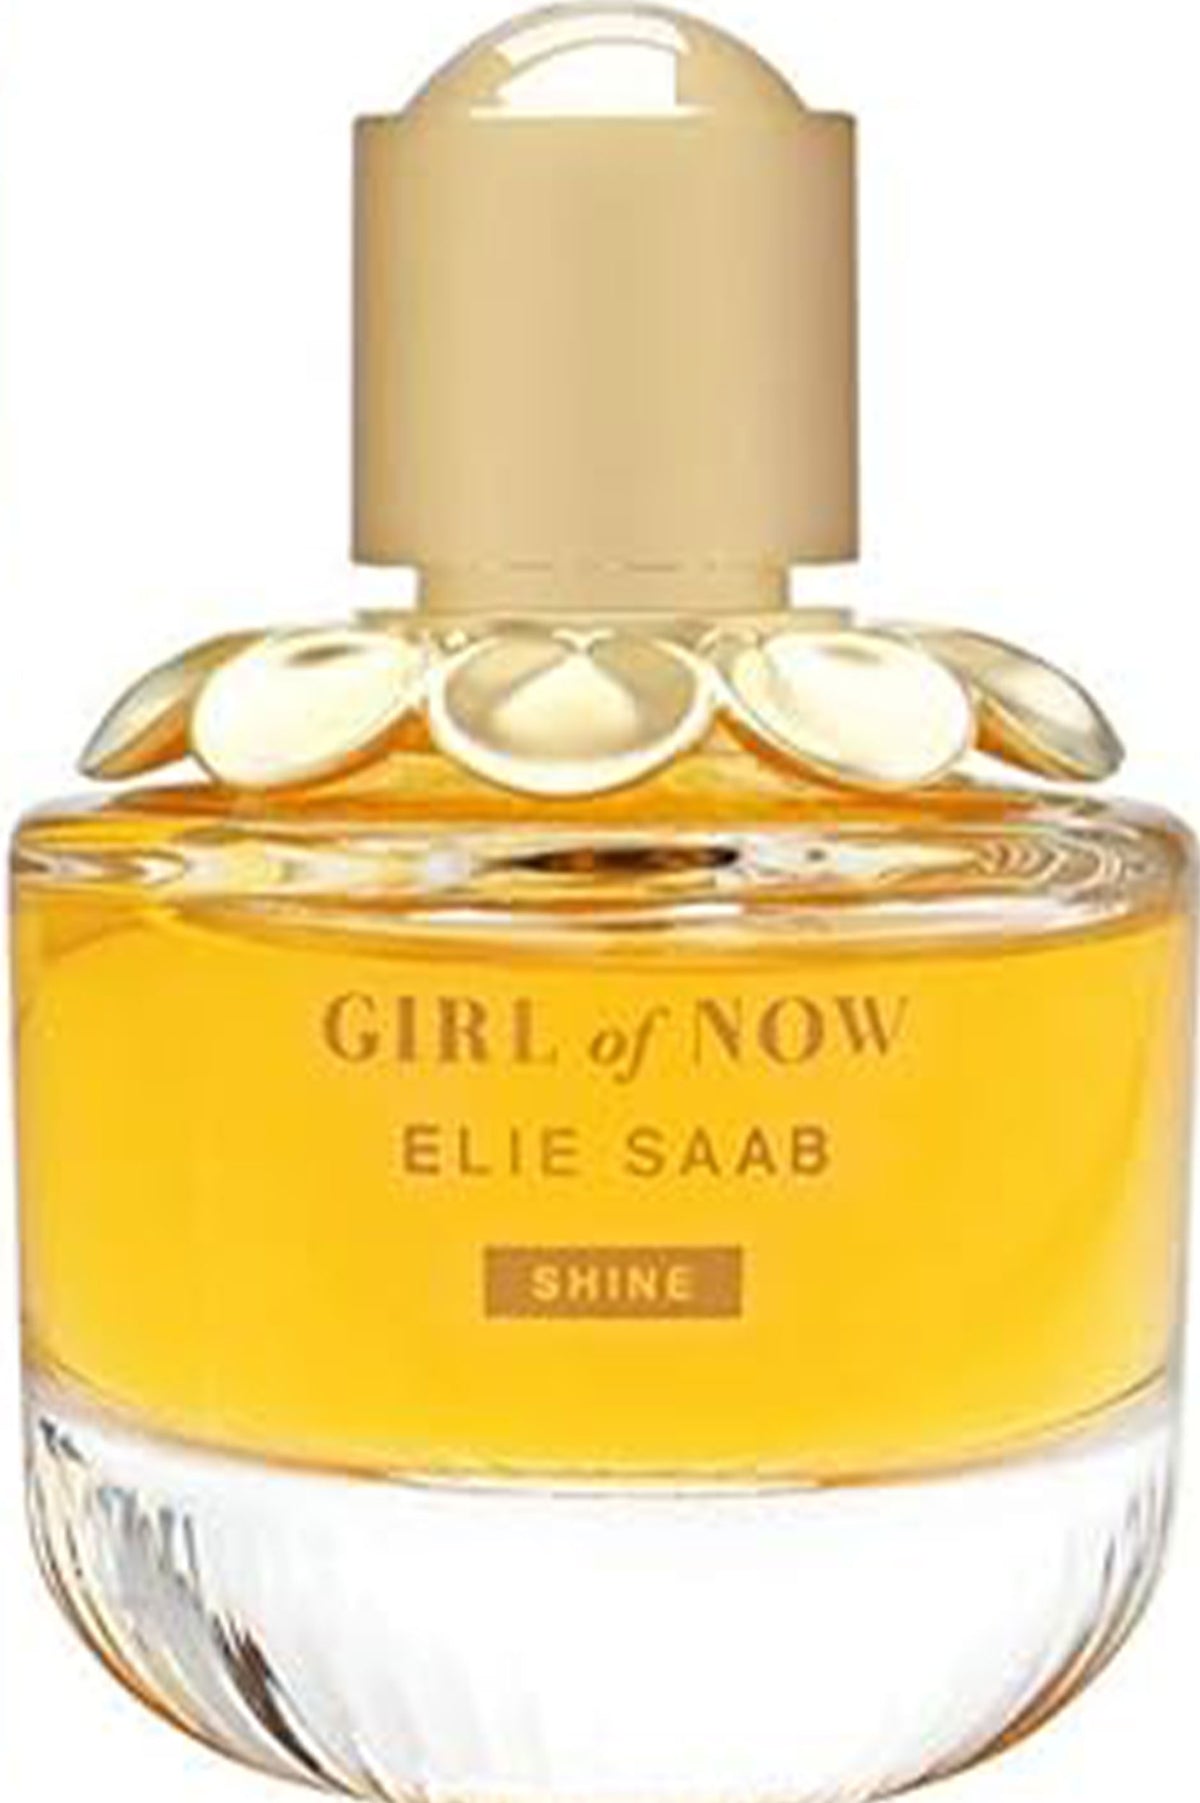 Elie Saab - Girl of Now Shine Eau De Parfum For Her